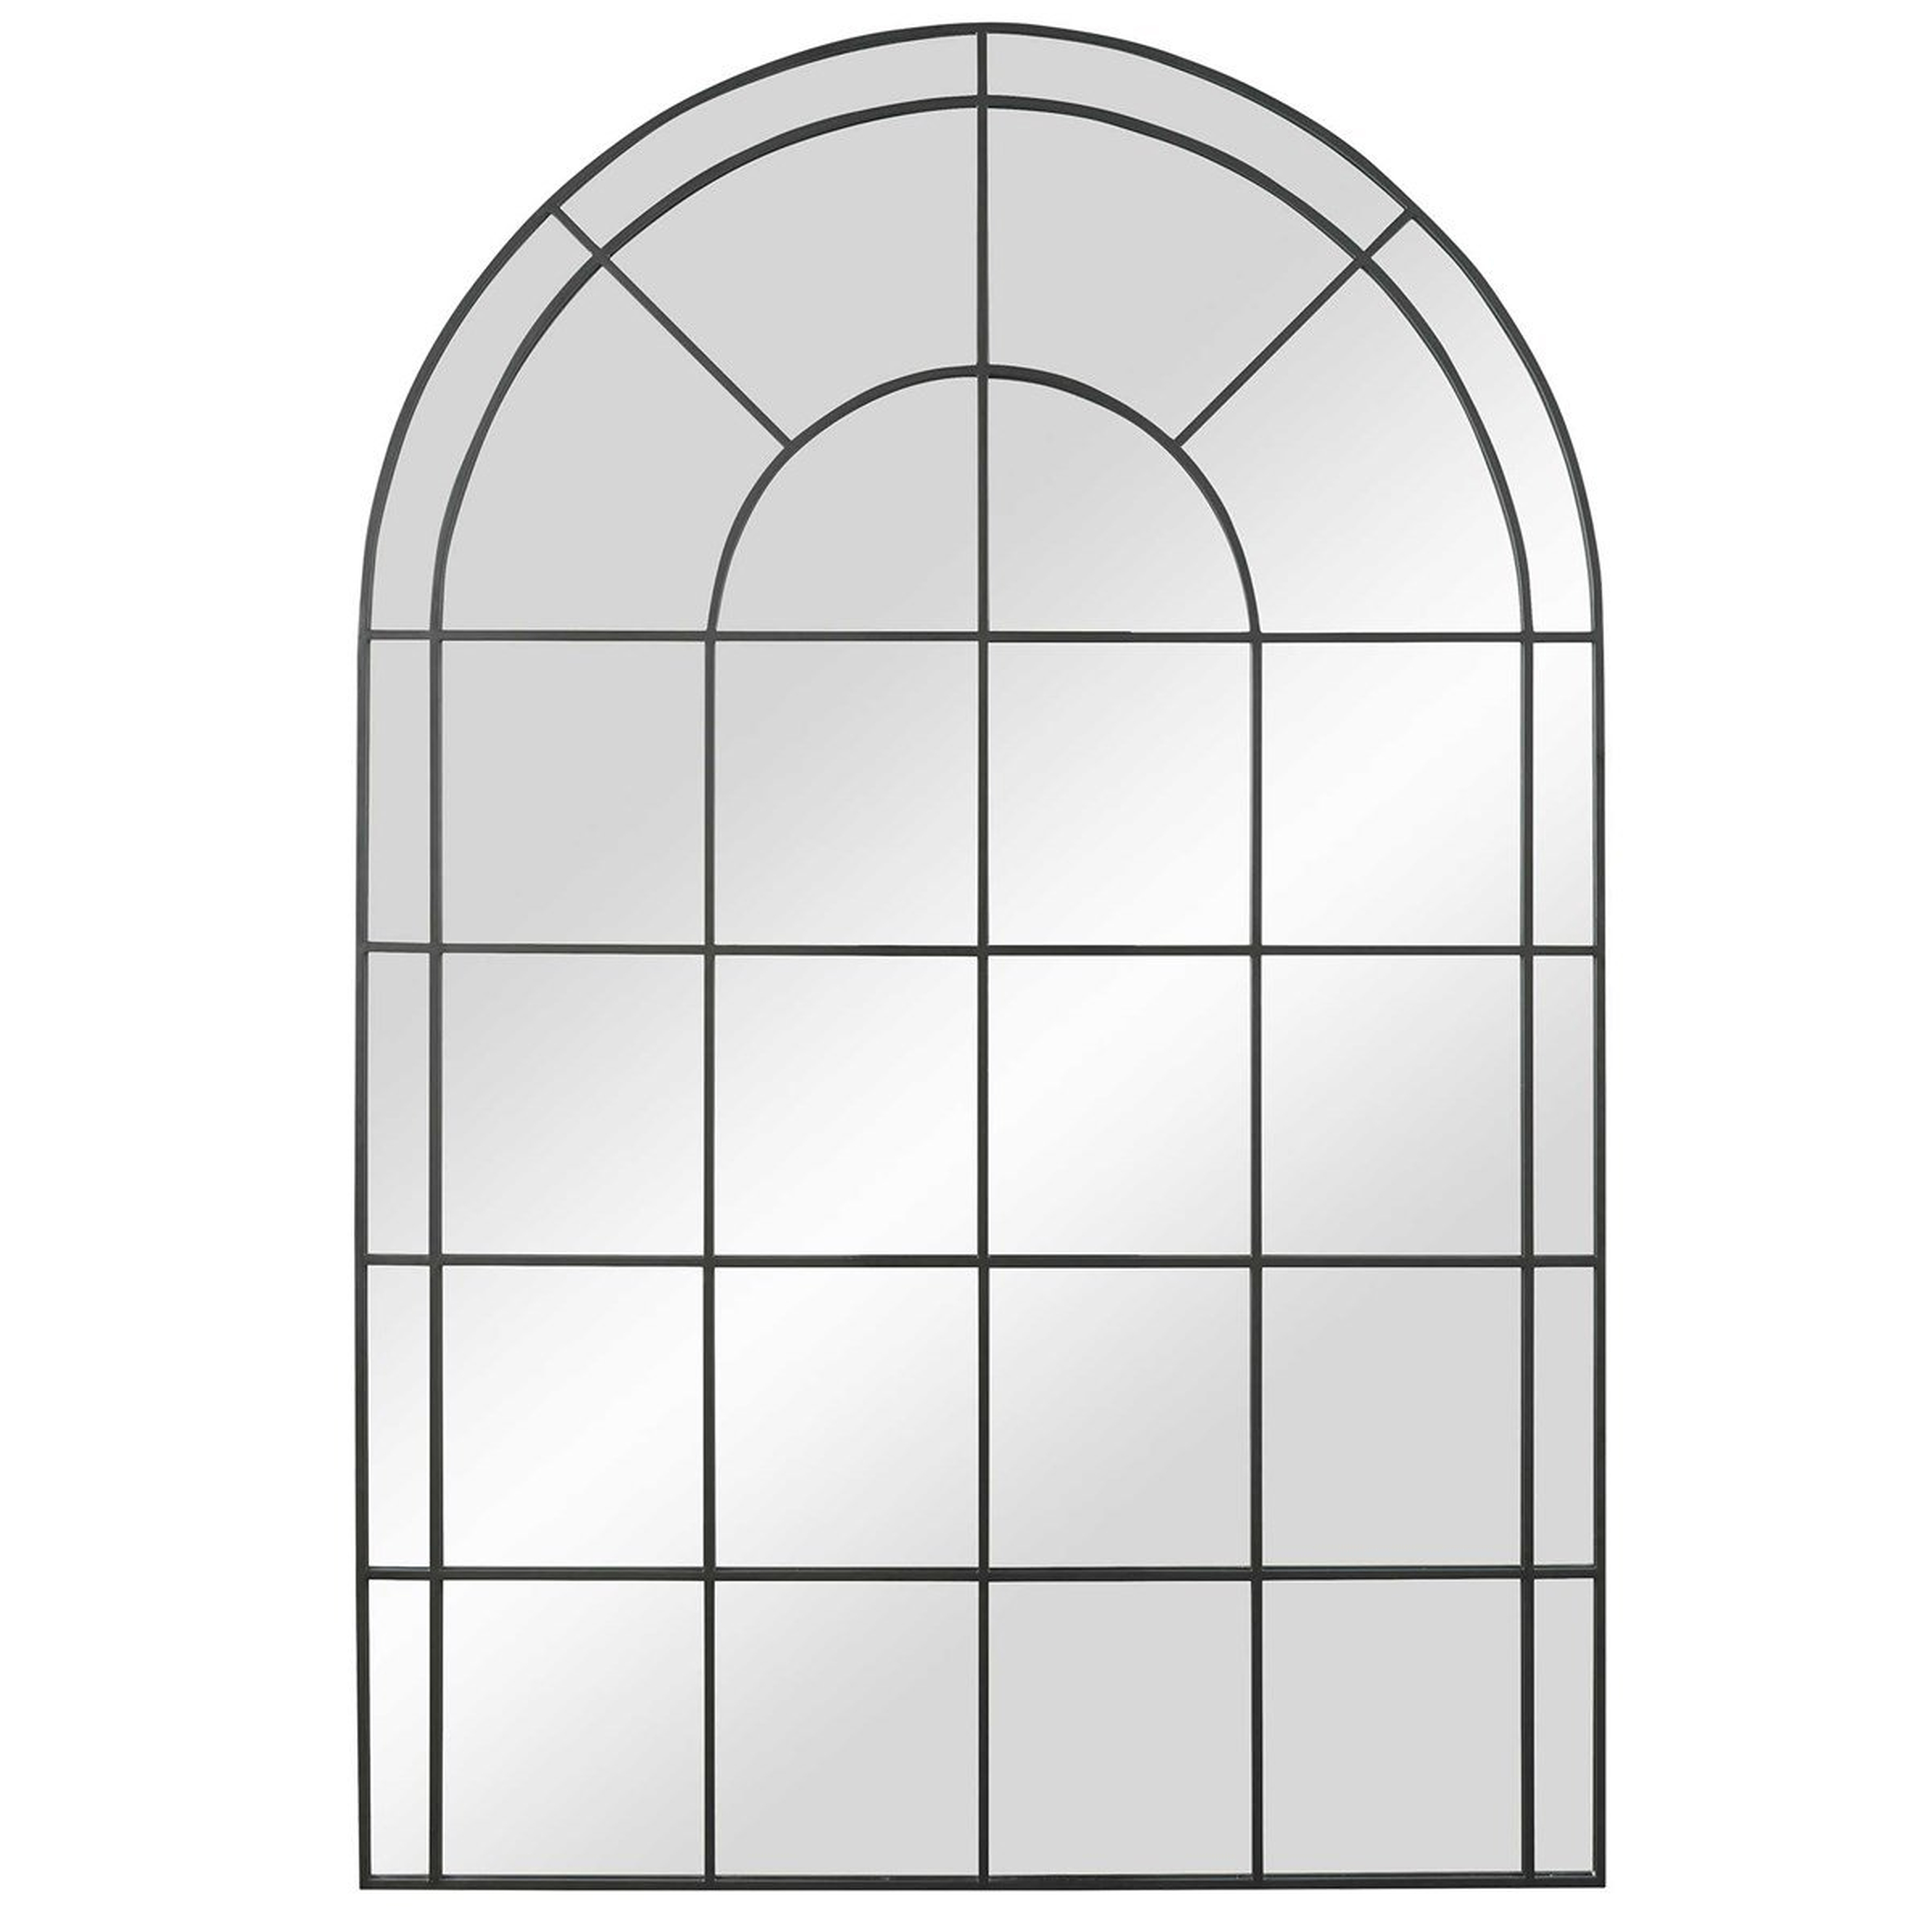 Grantola Arch Mirror, Black - Hudsonhill Foundry